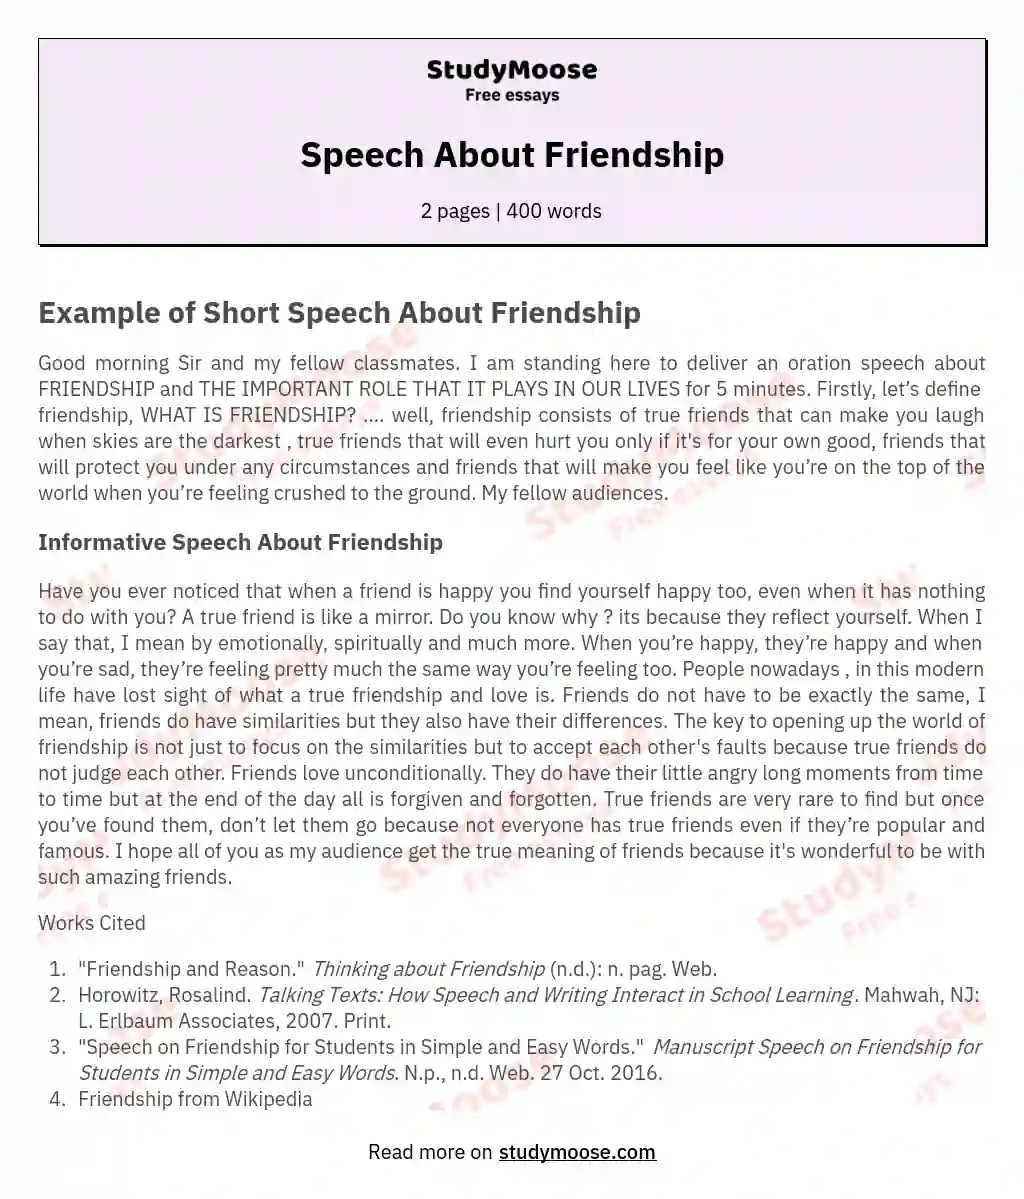 Speech About Friendship essay